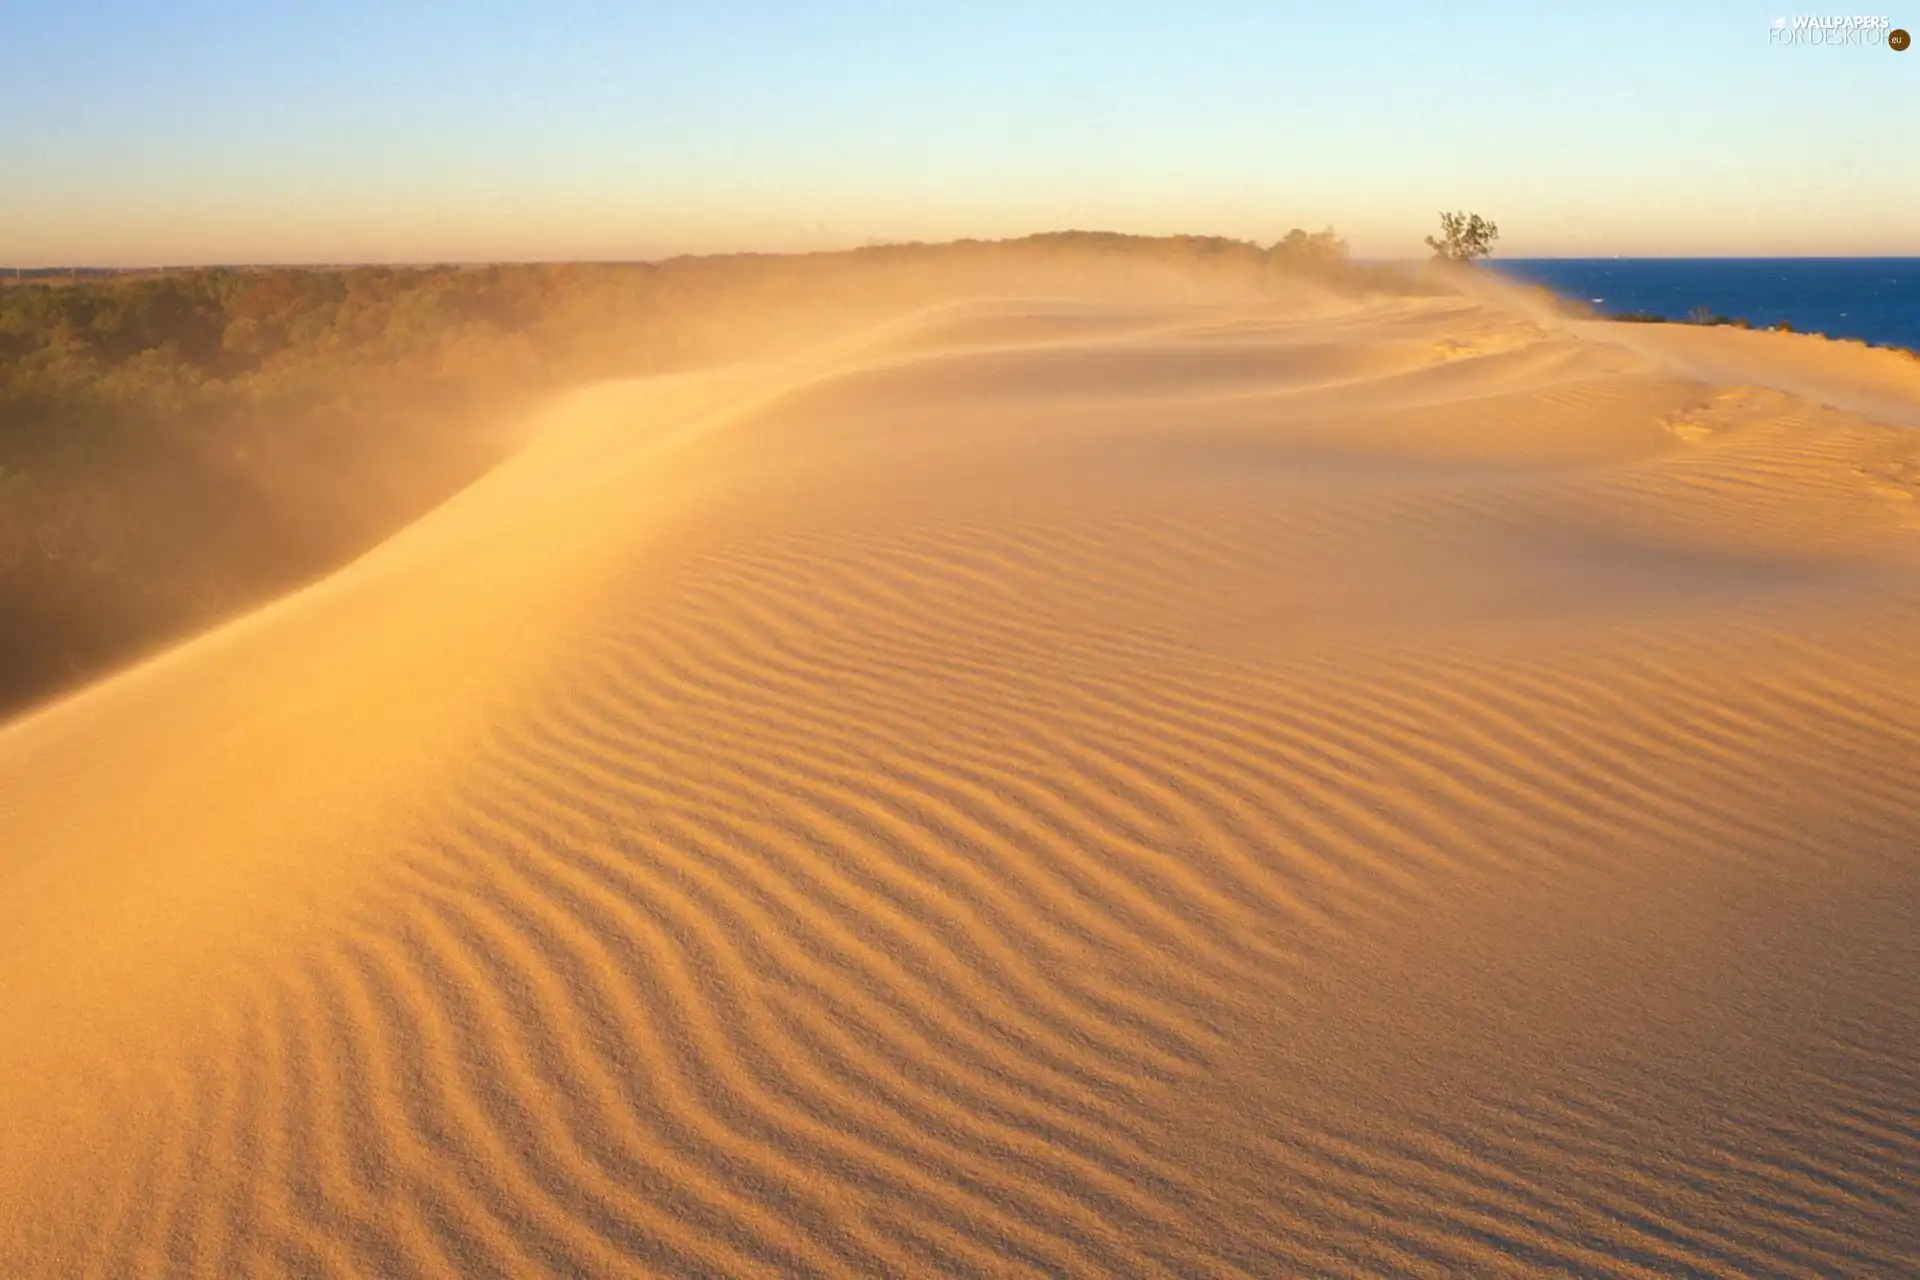 Dunes, Desert, america, North, Indiana